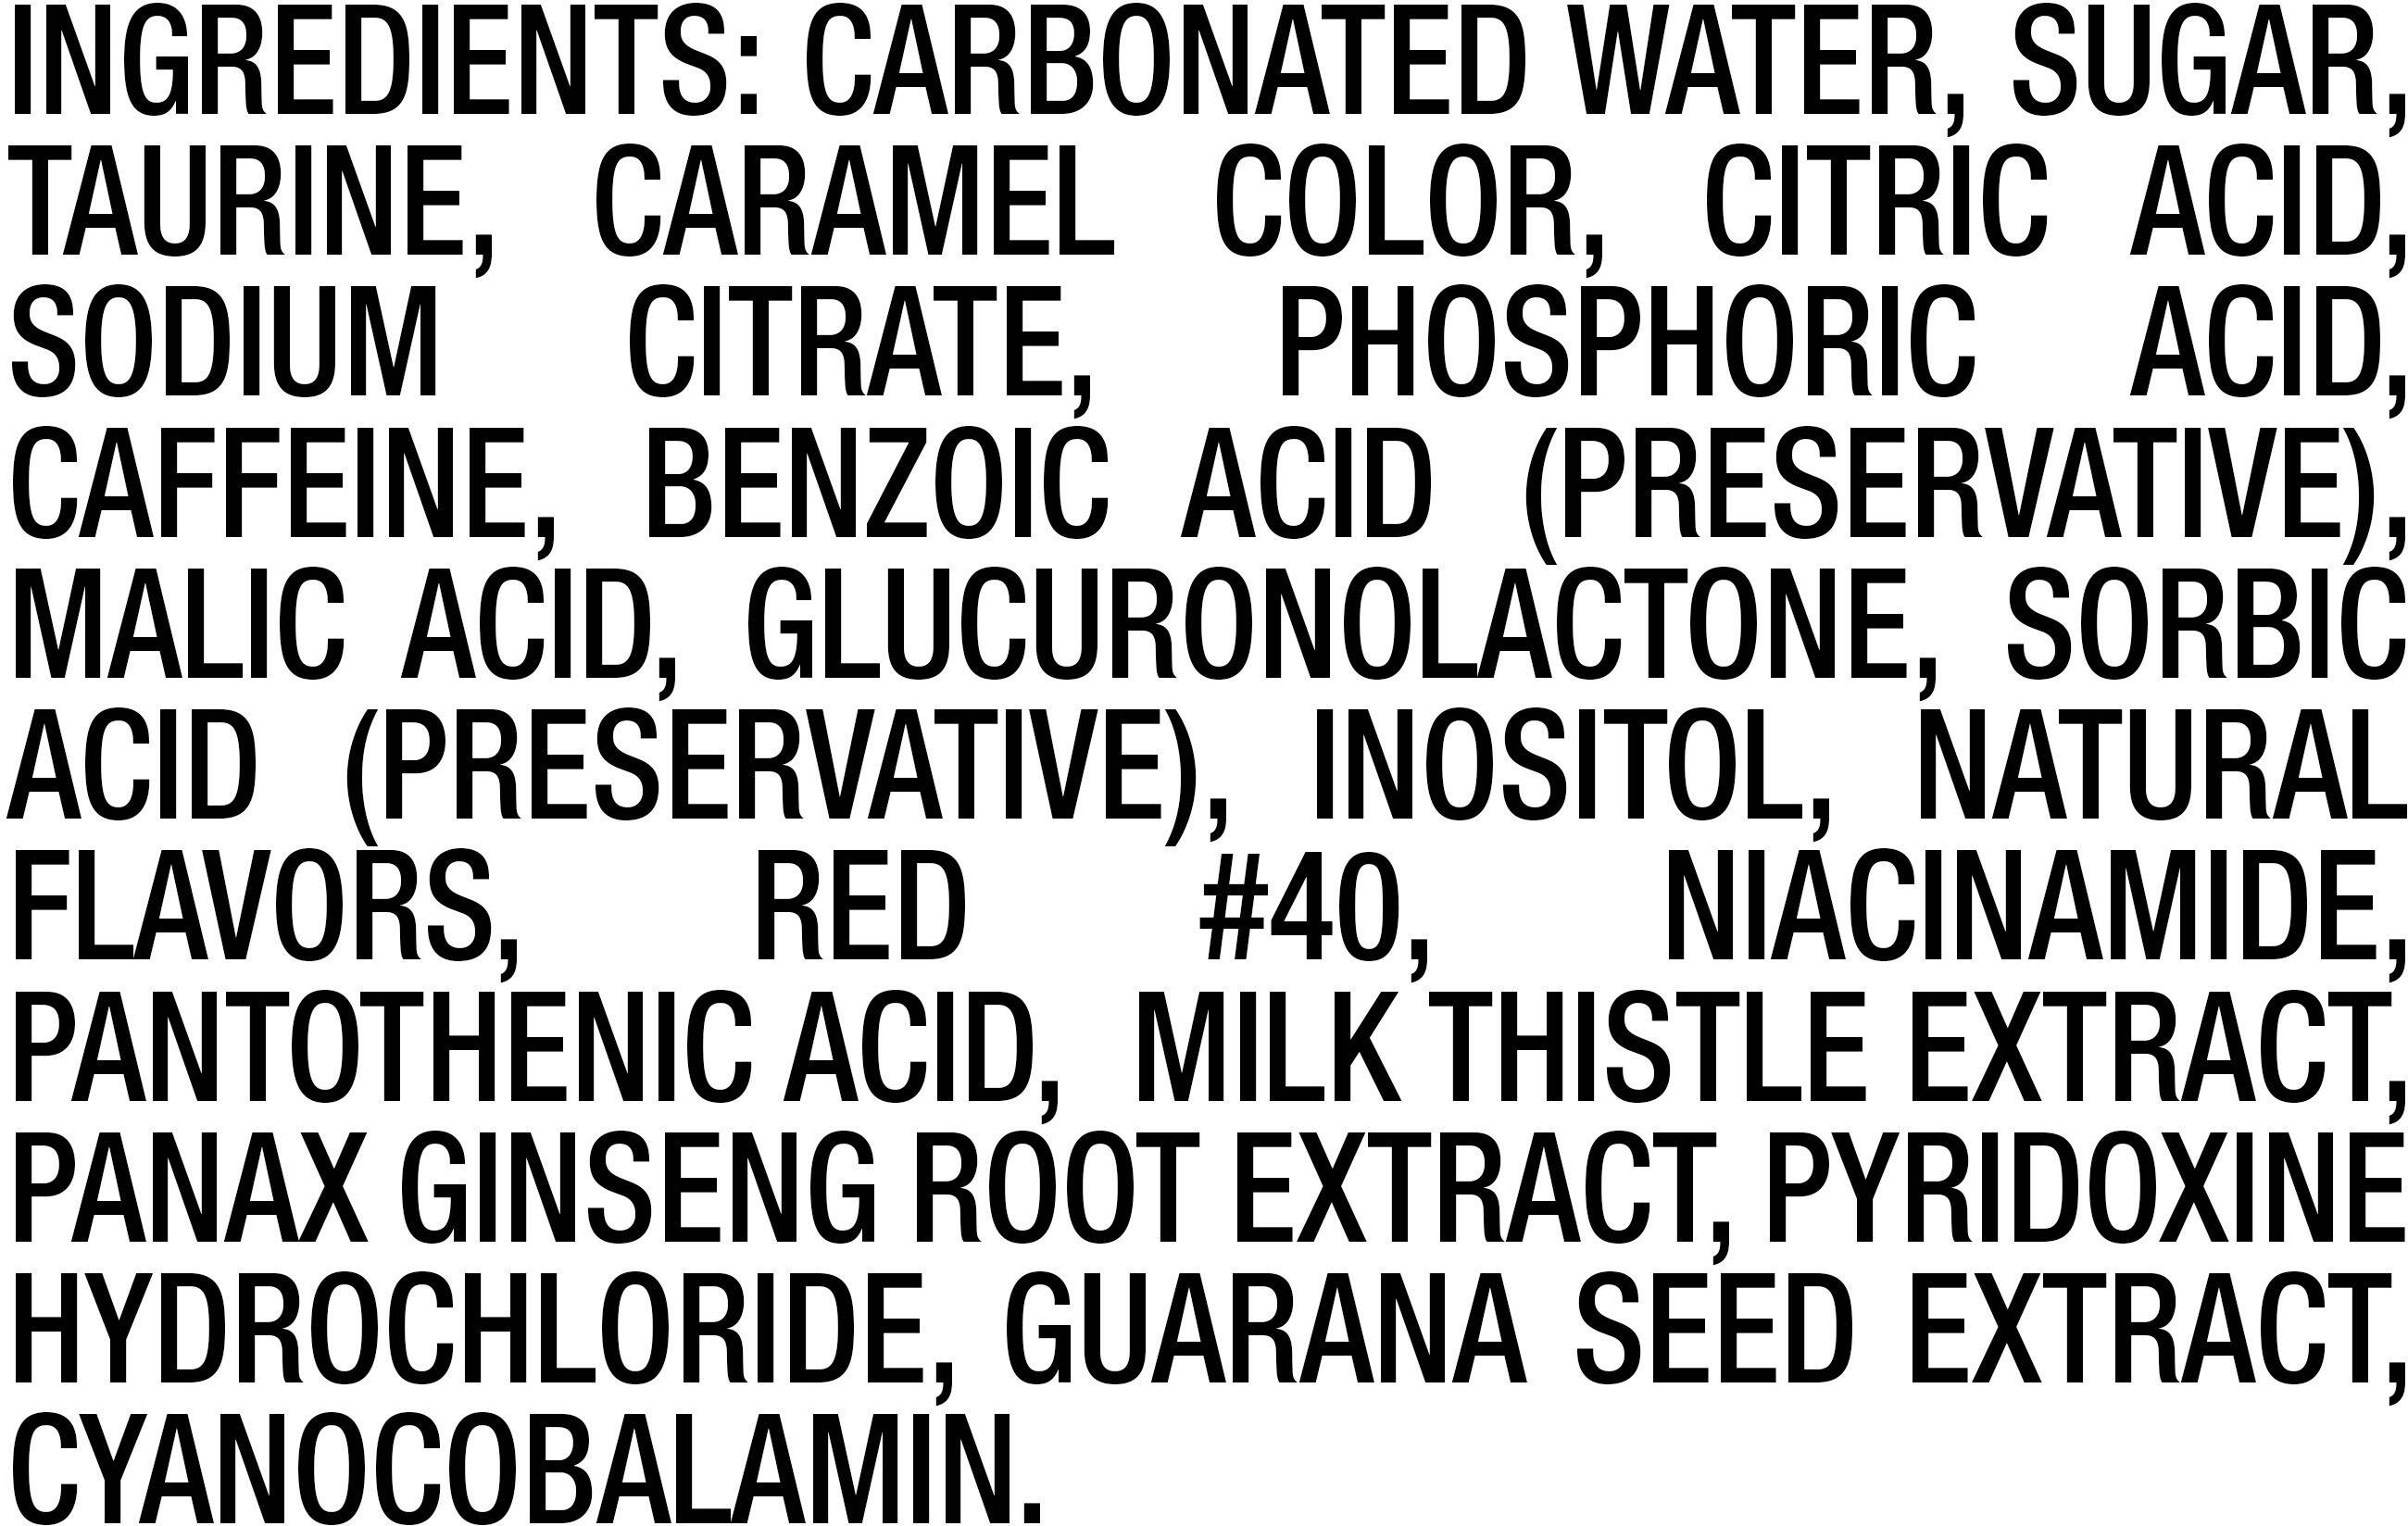 Image describing nutrition information for product Rockstar Revolt Killer Black Cherry